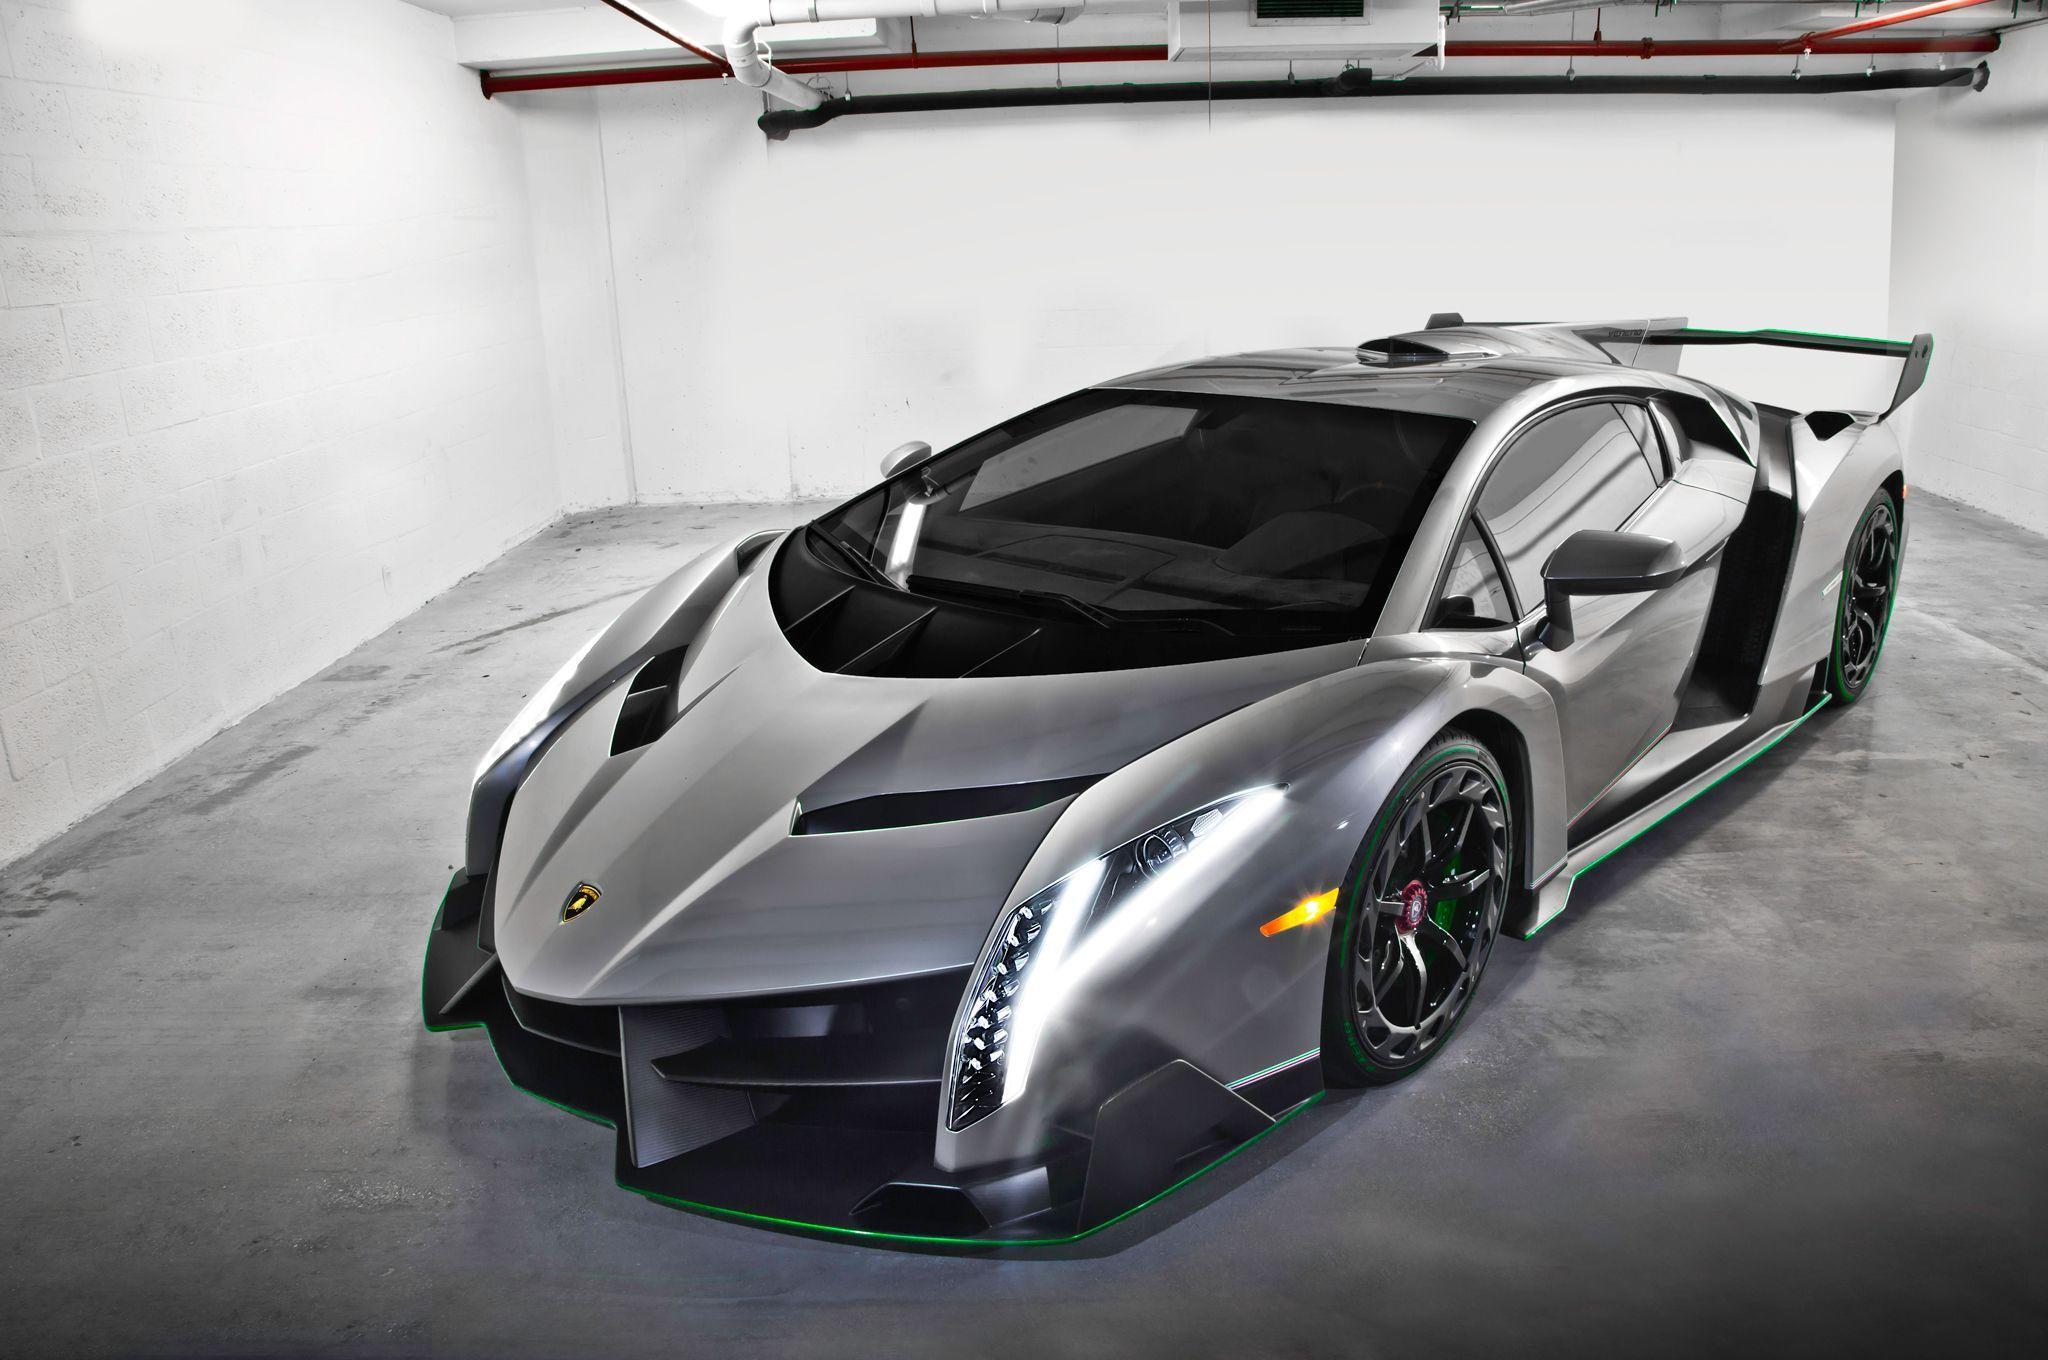 image about Lamborghini Veneno